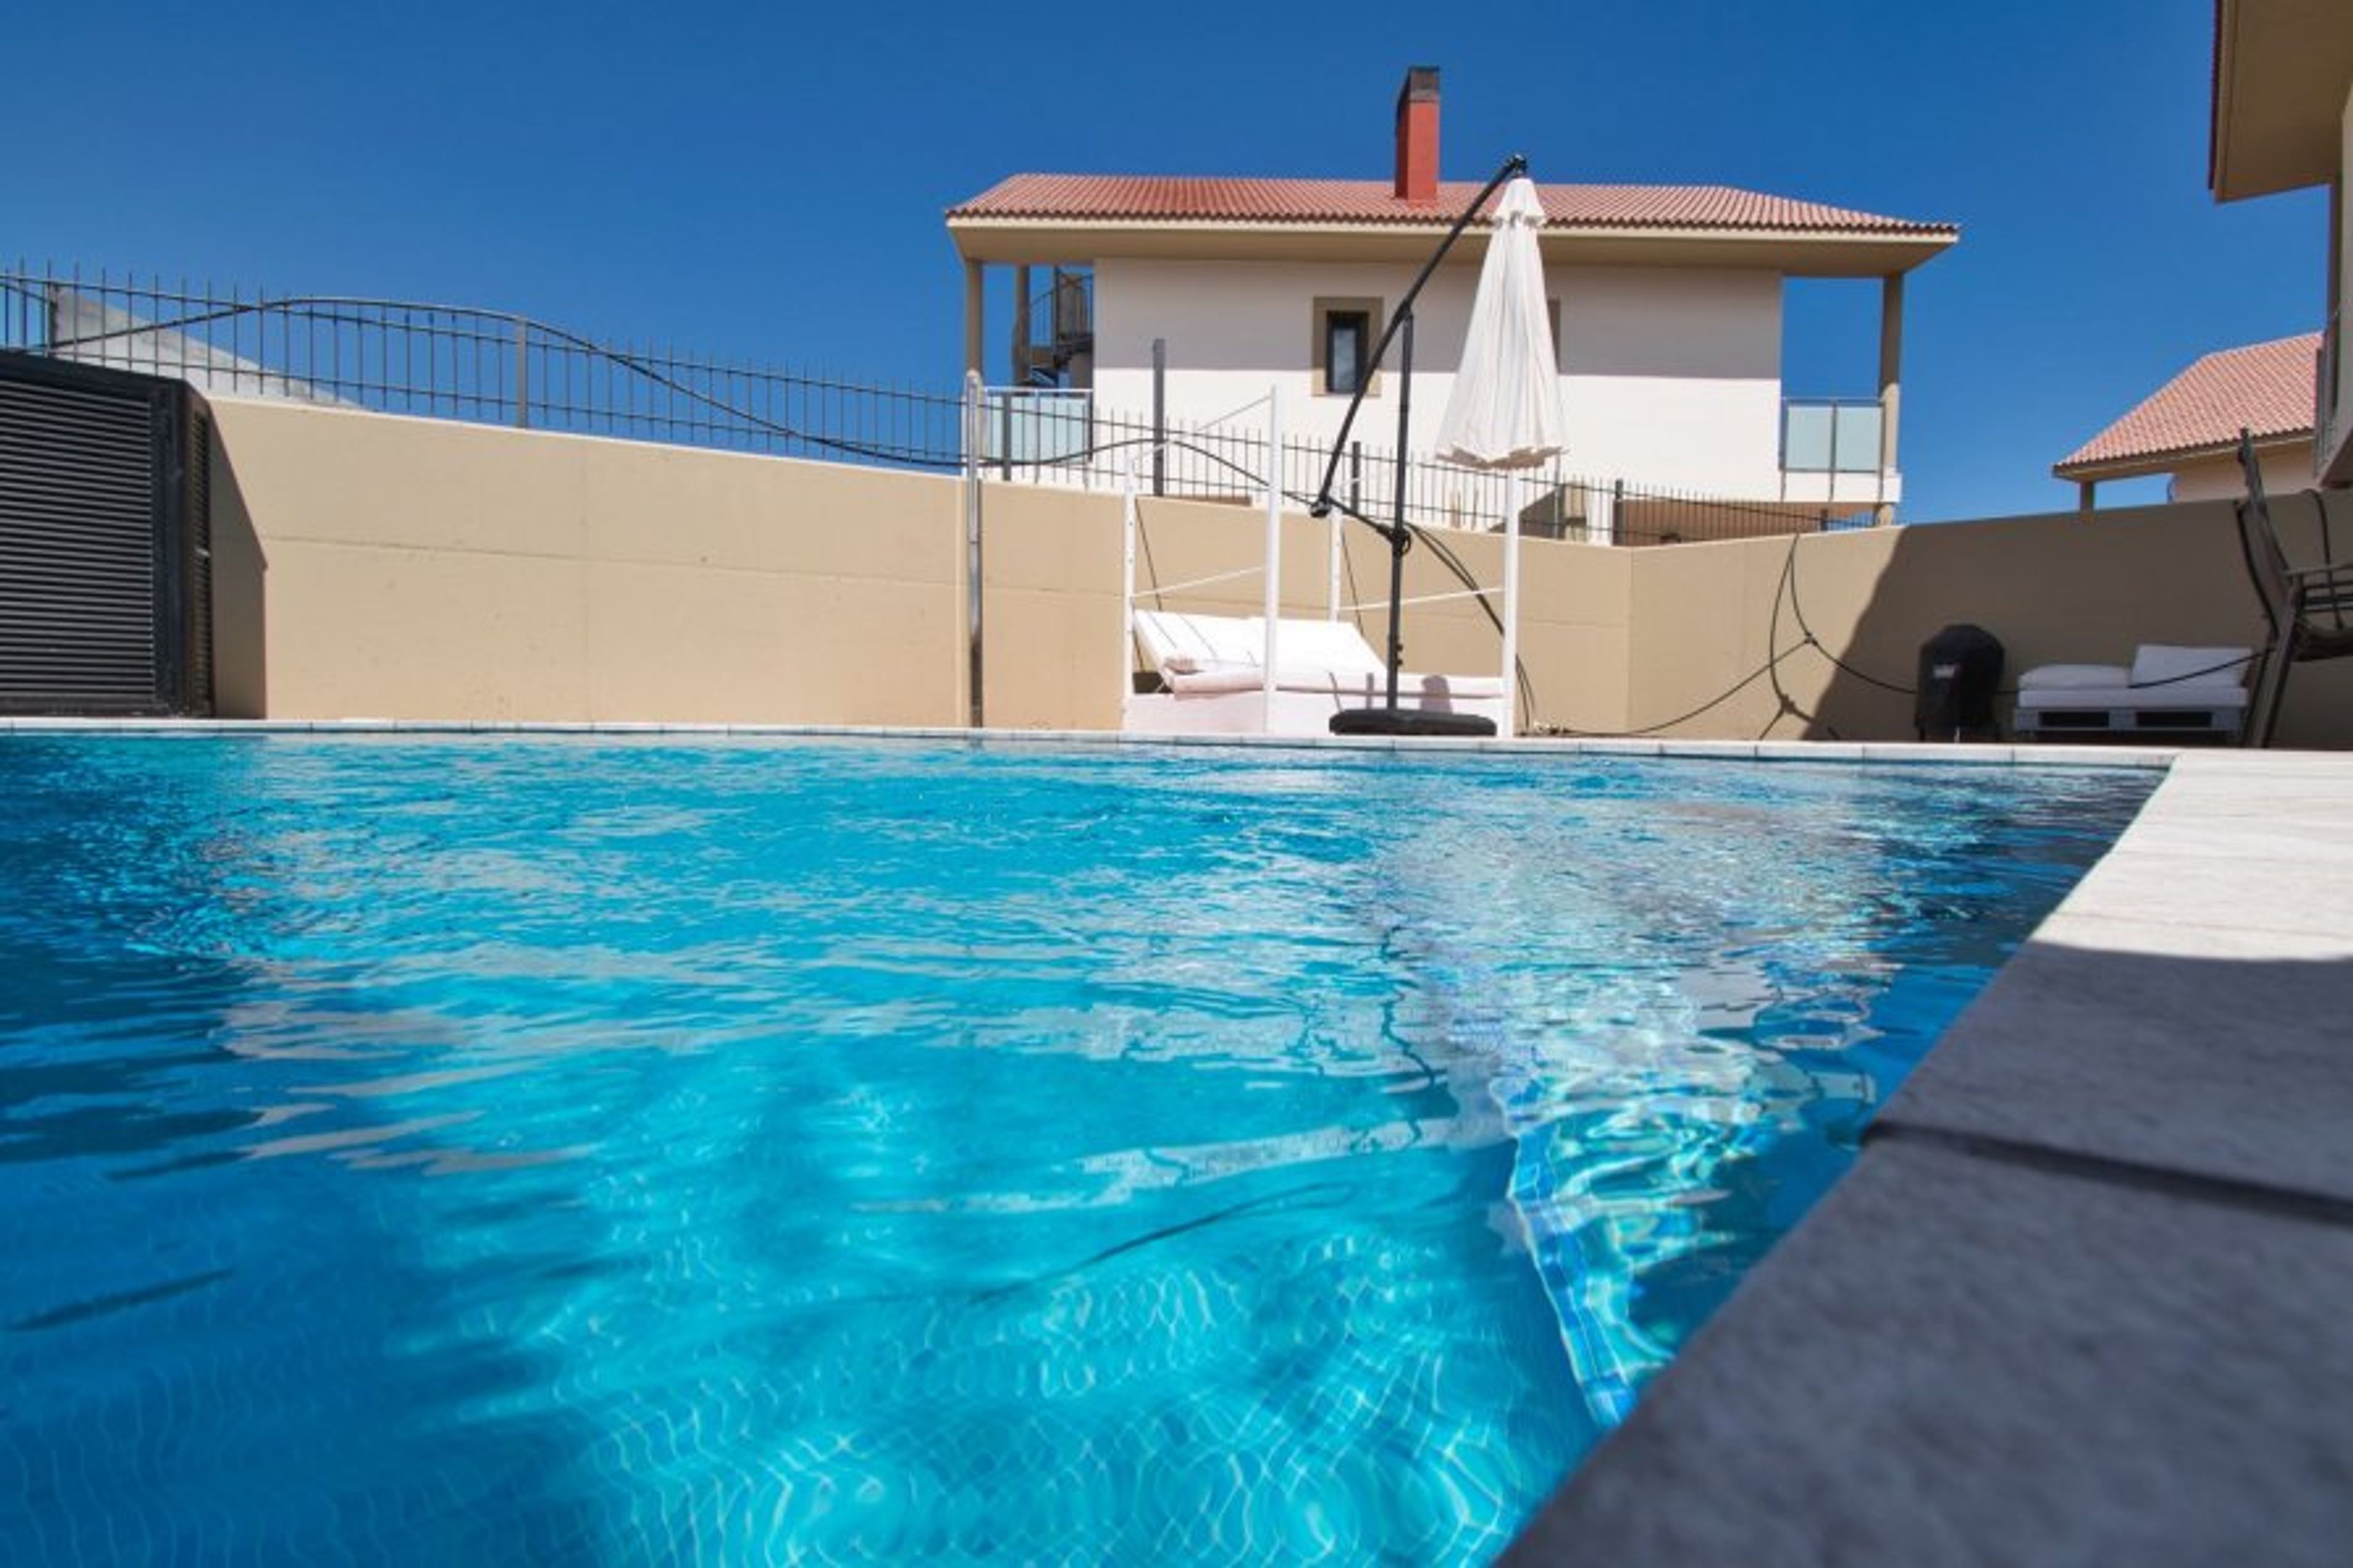 The stunning pool and villa